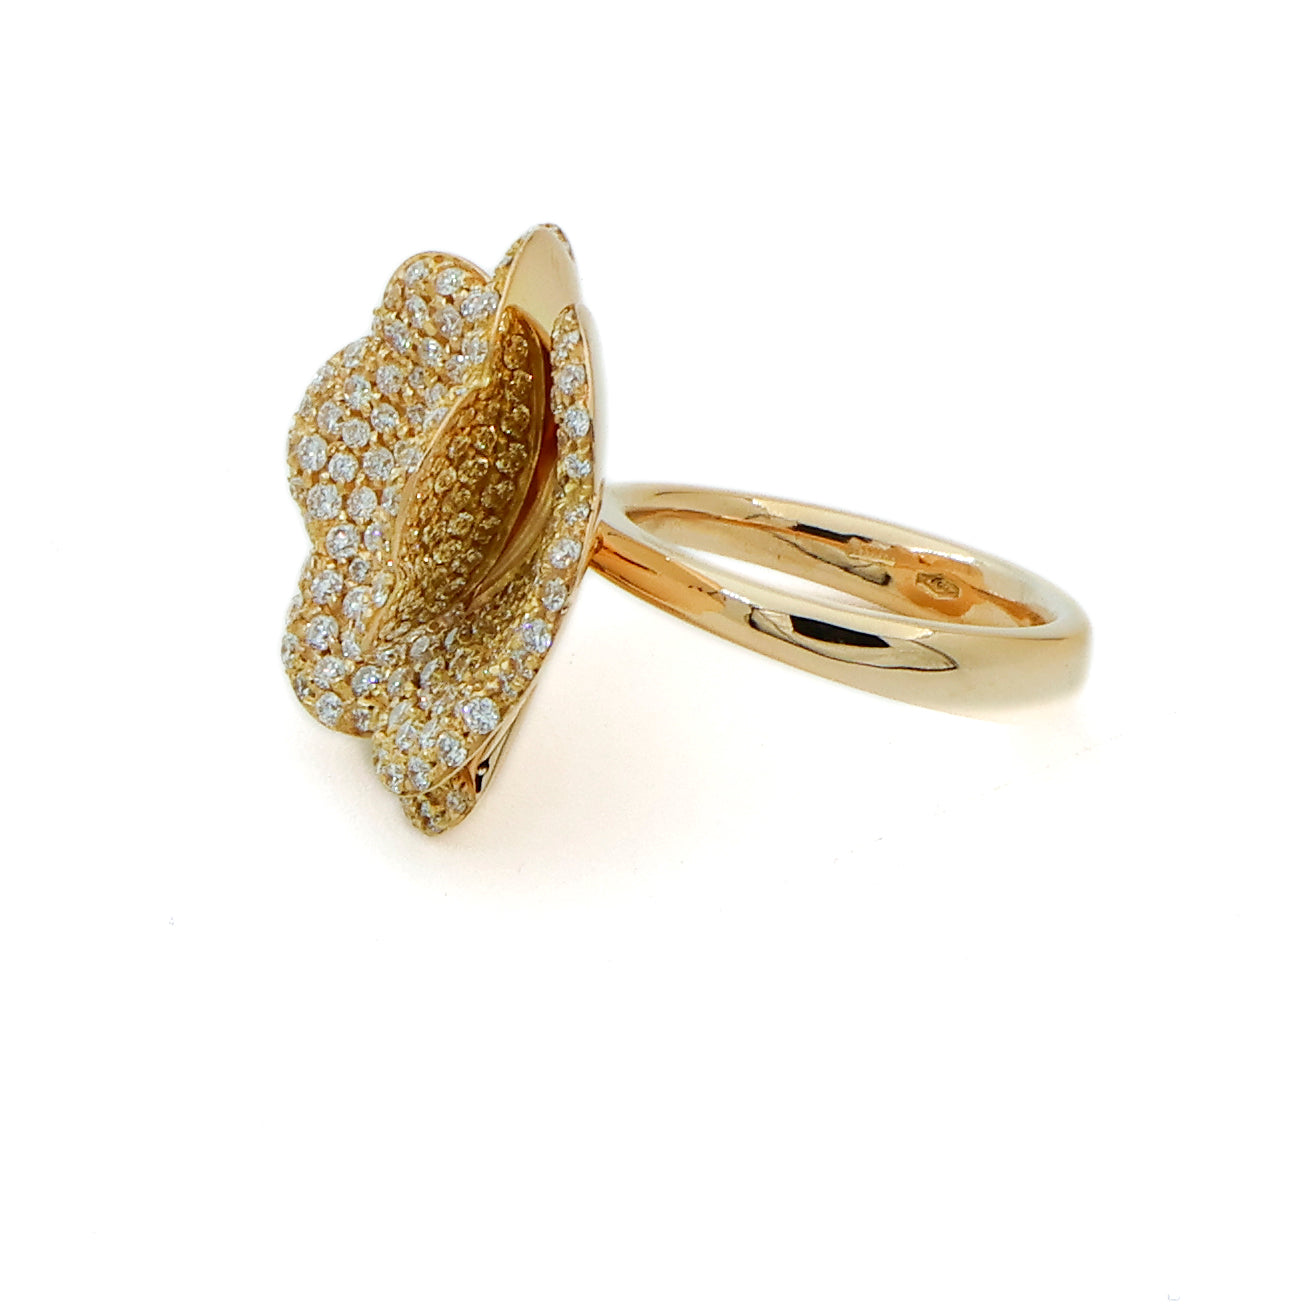 Giorgio Visconti Diamond Flower Ring in 18k Yellow Gold - Petite Size 4.25